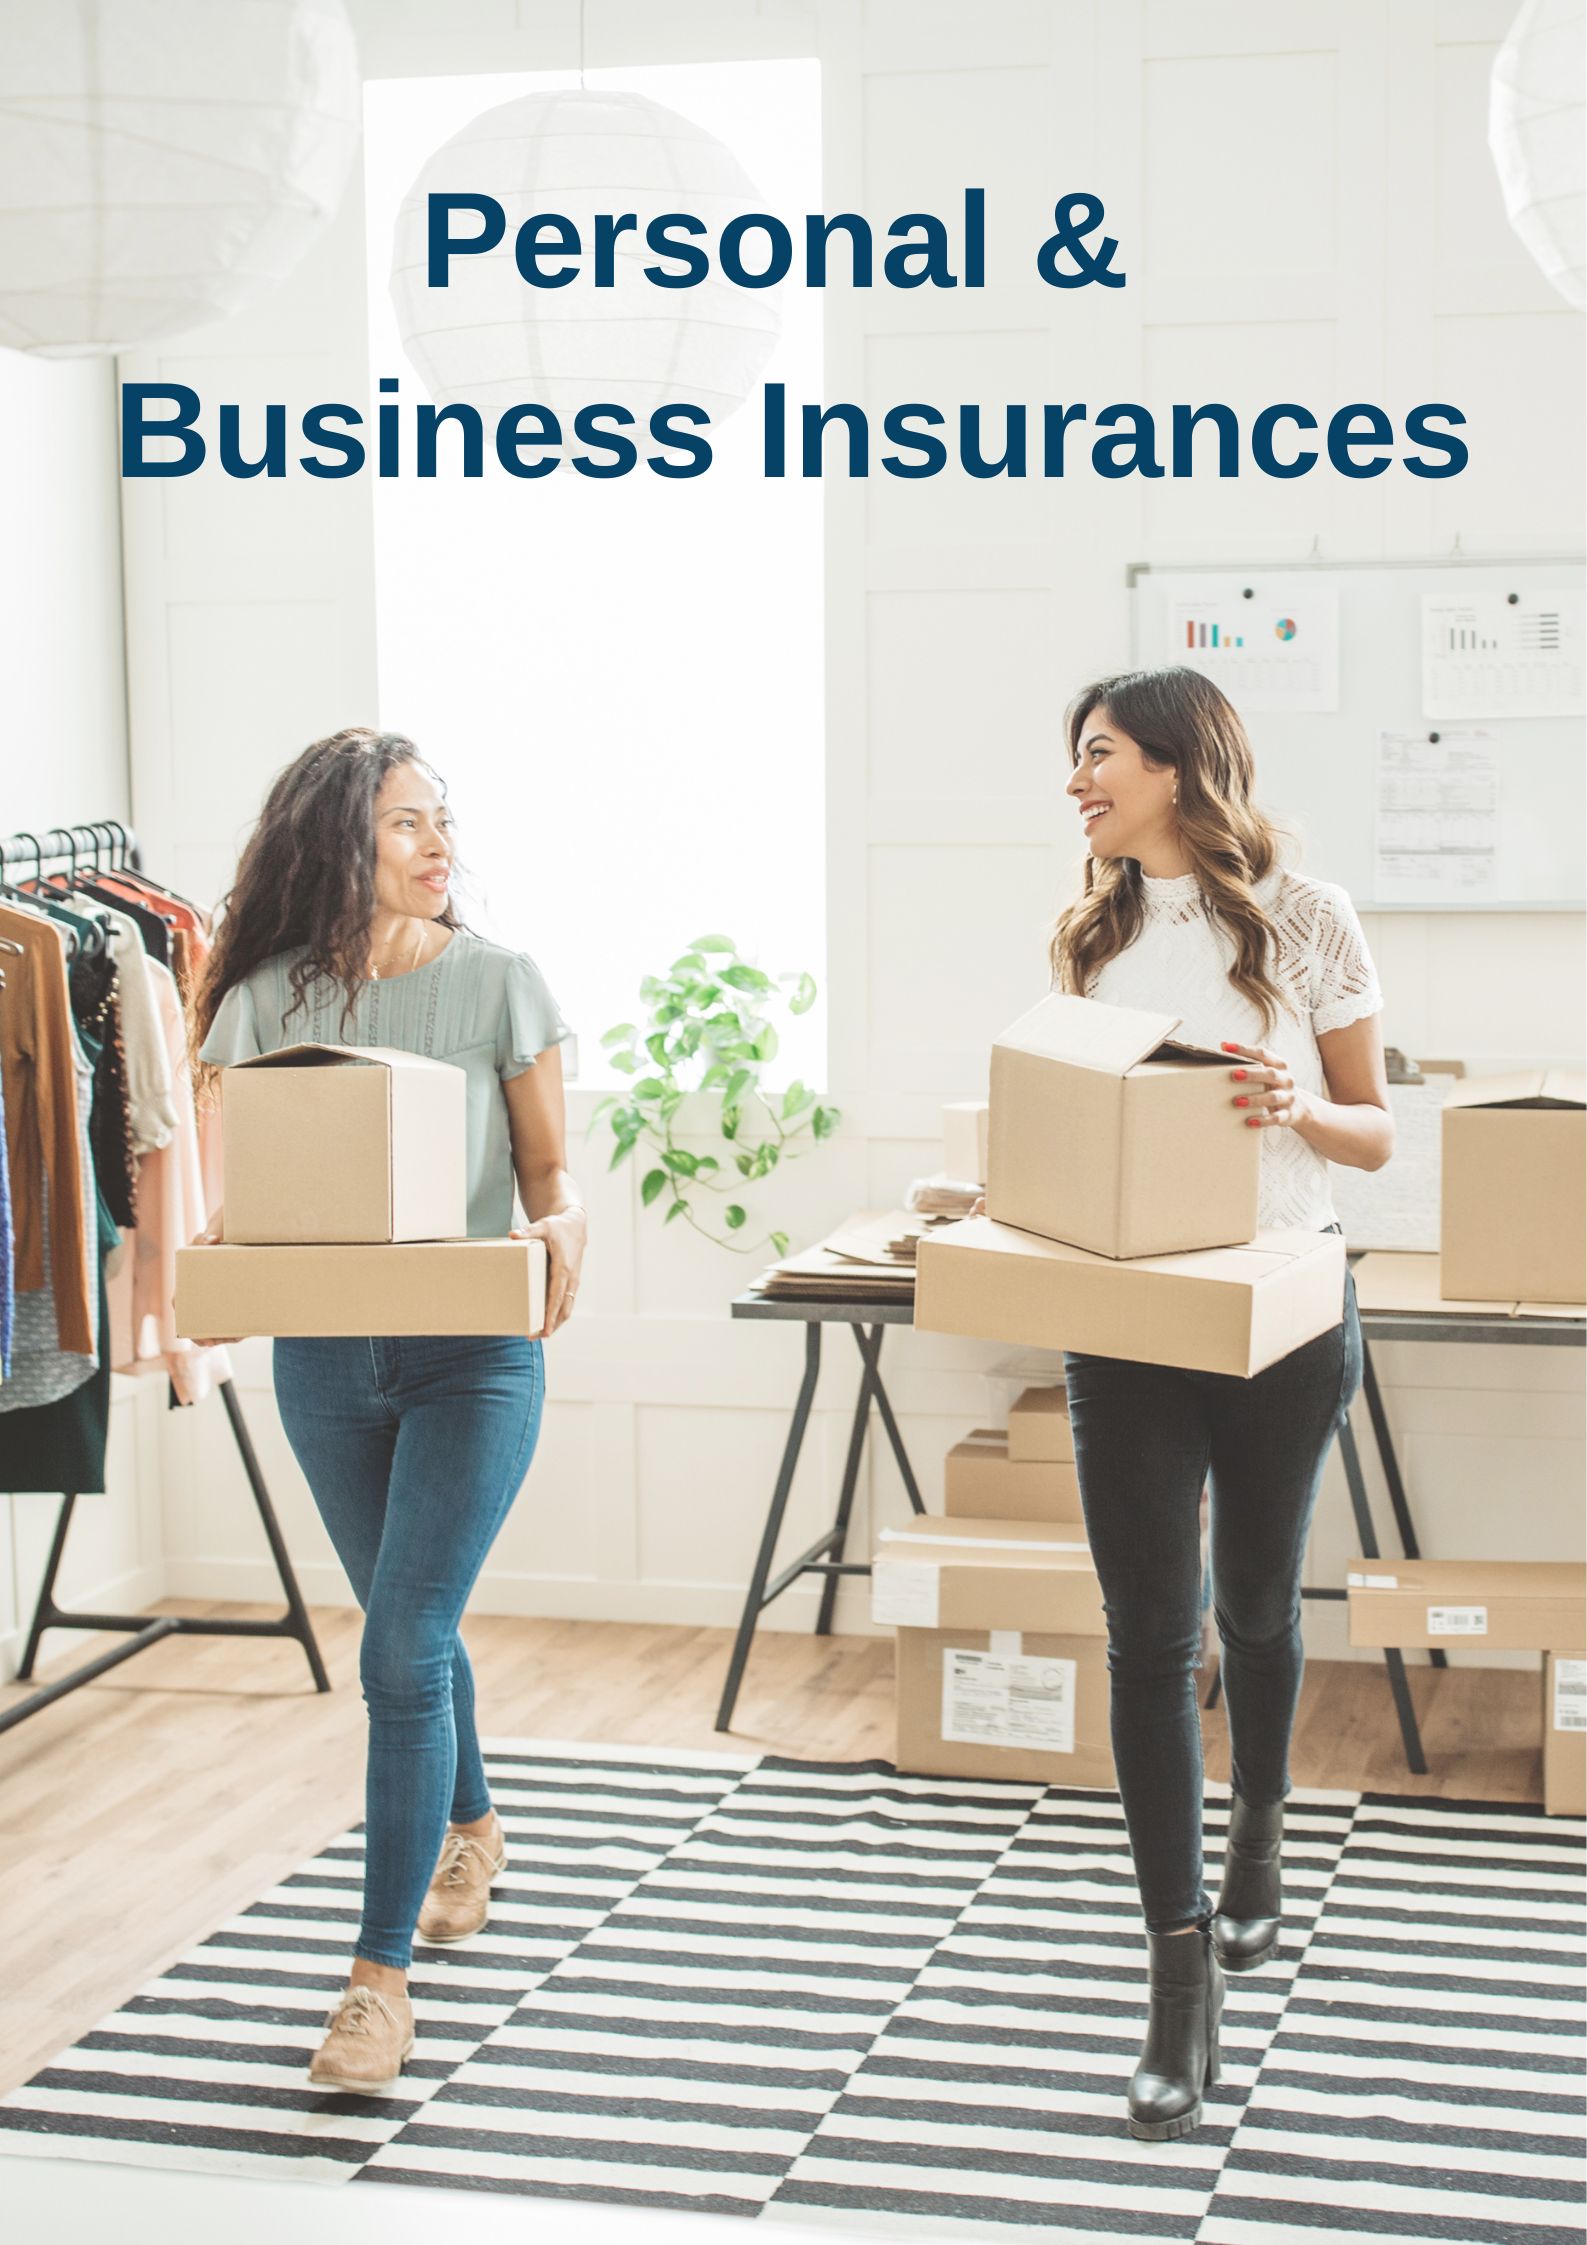 Personal & Business Insurances